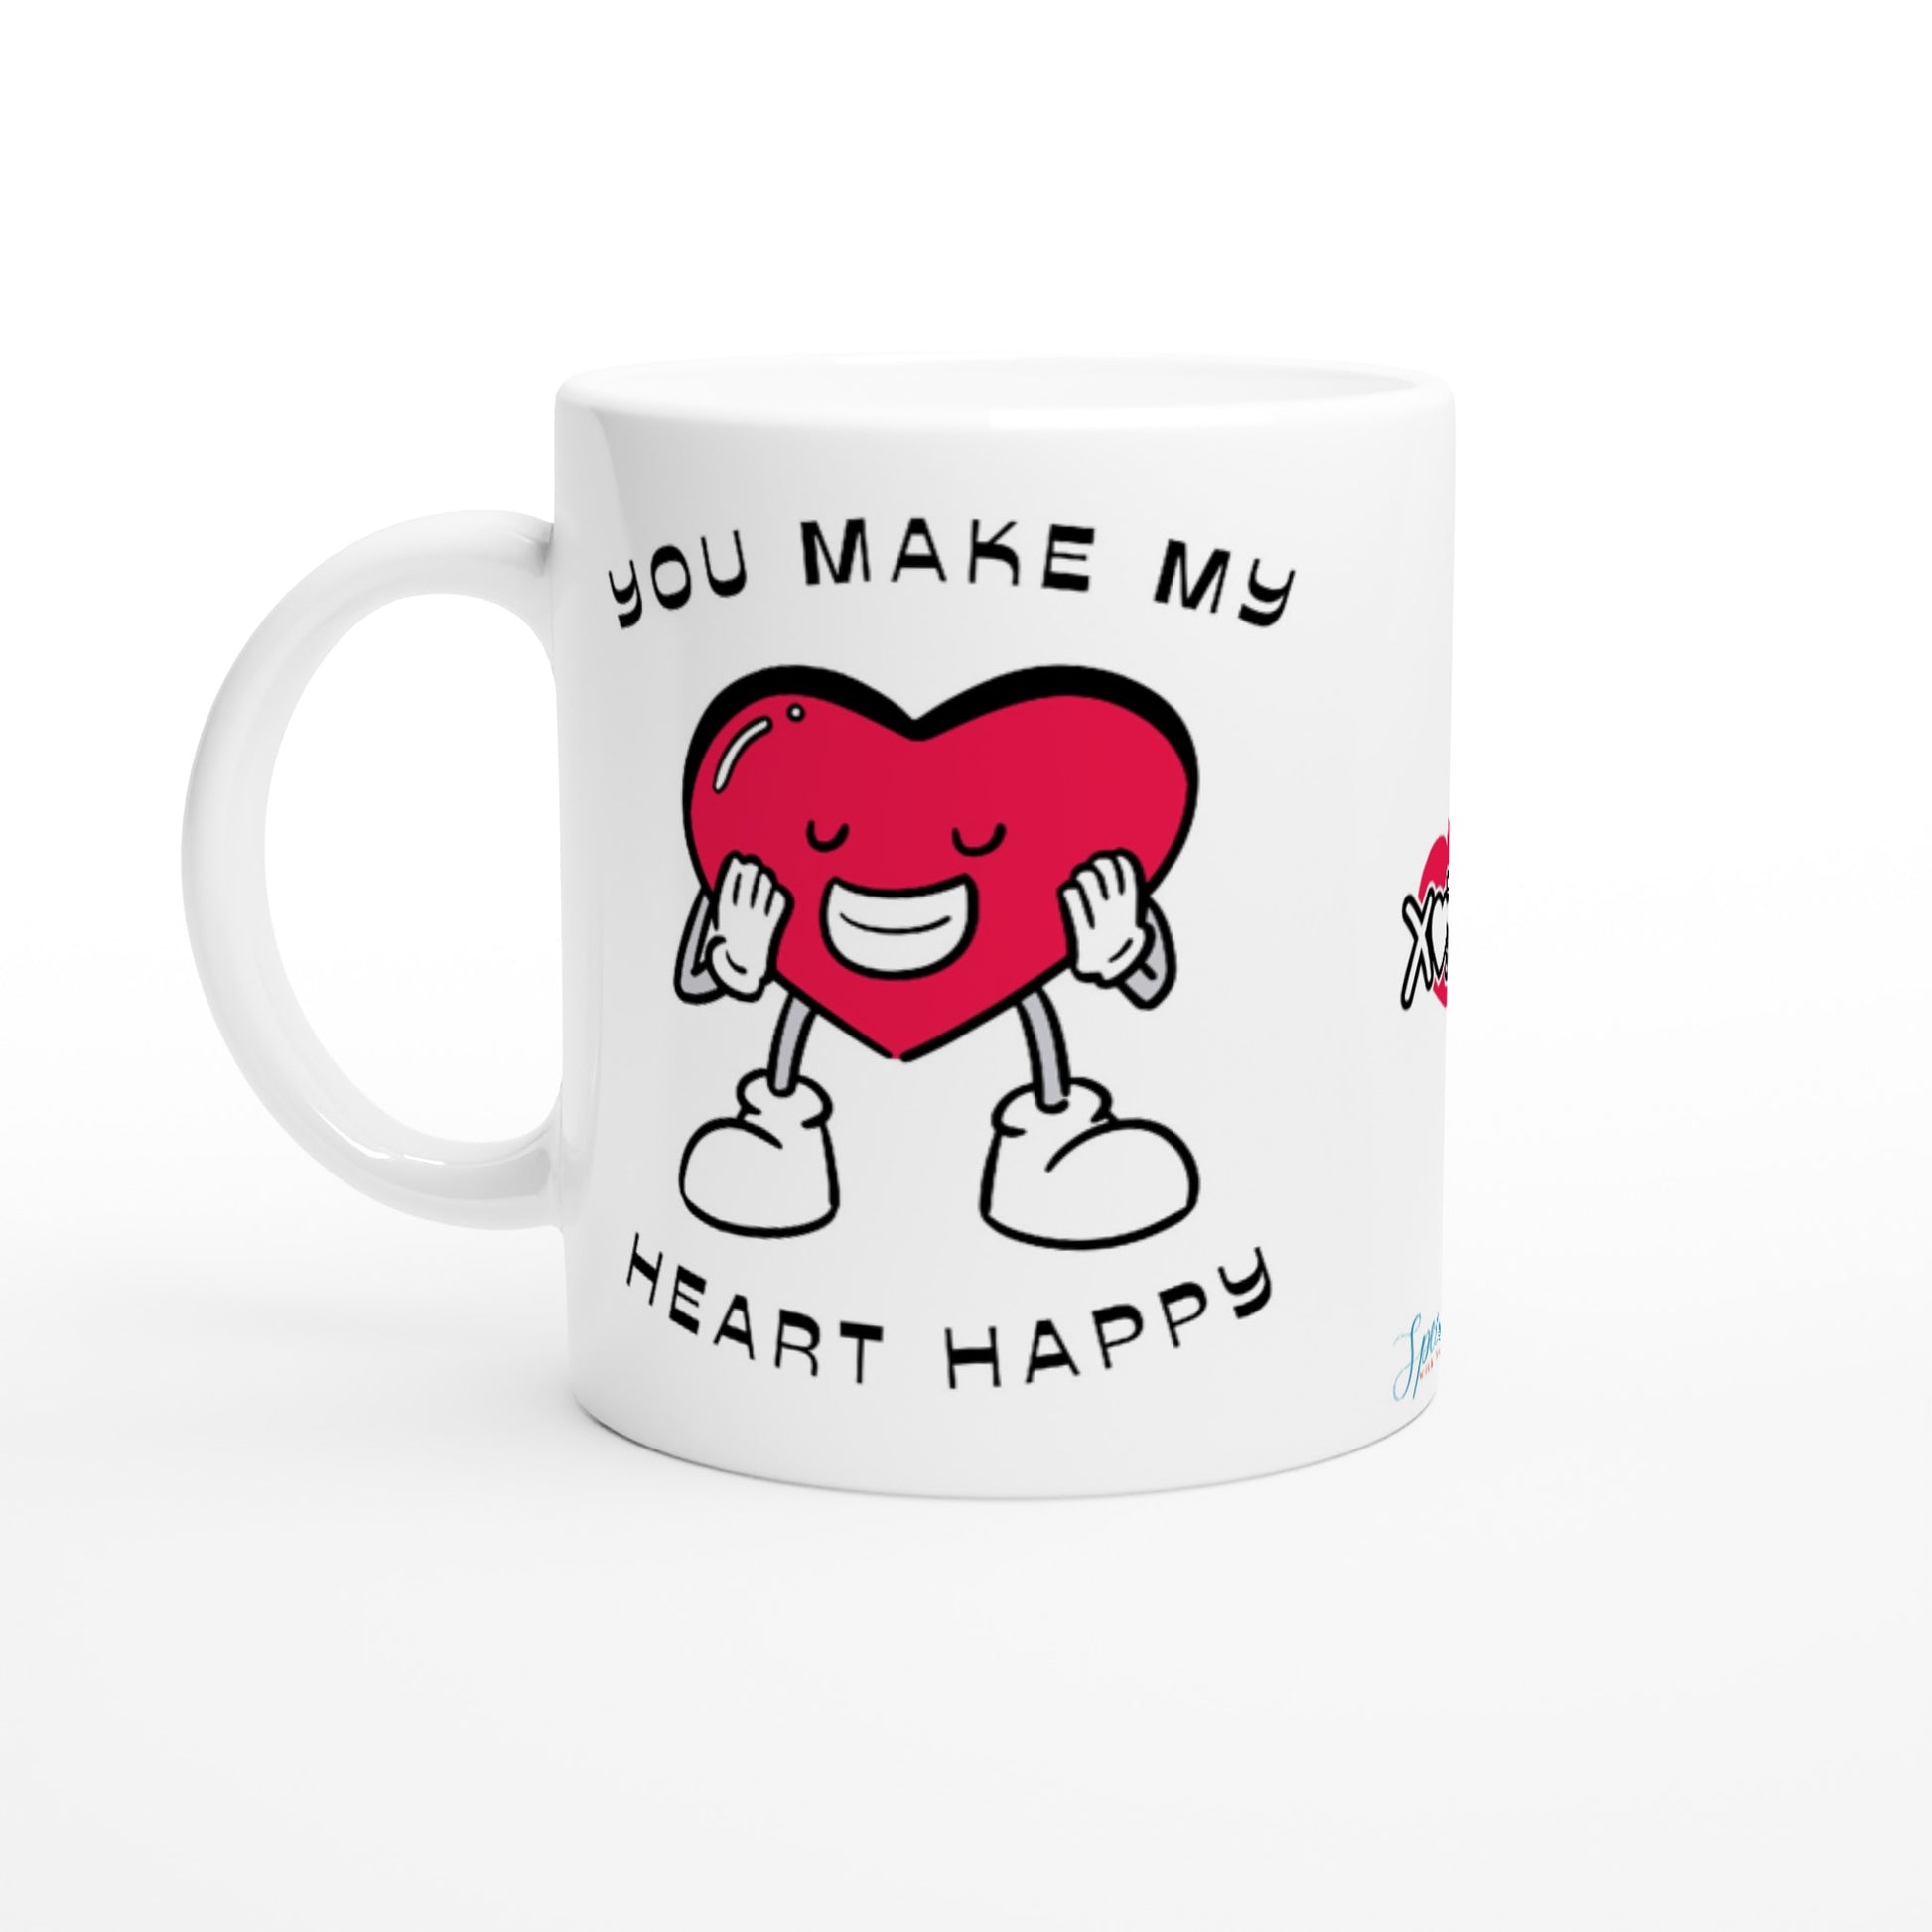 "You Make My Heart Happy" Customizable Photo 11 oz. Mug front view